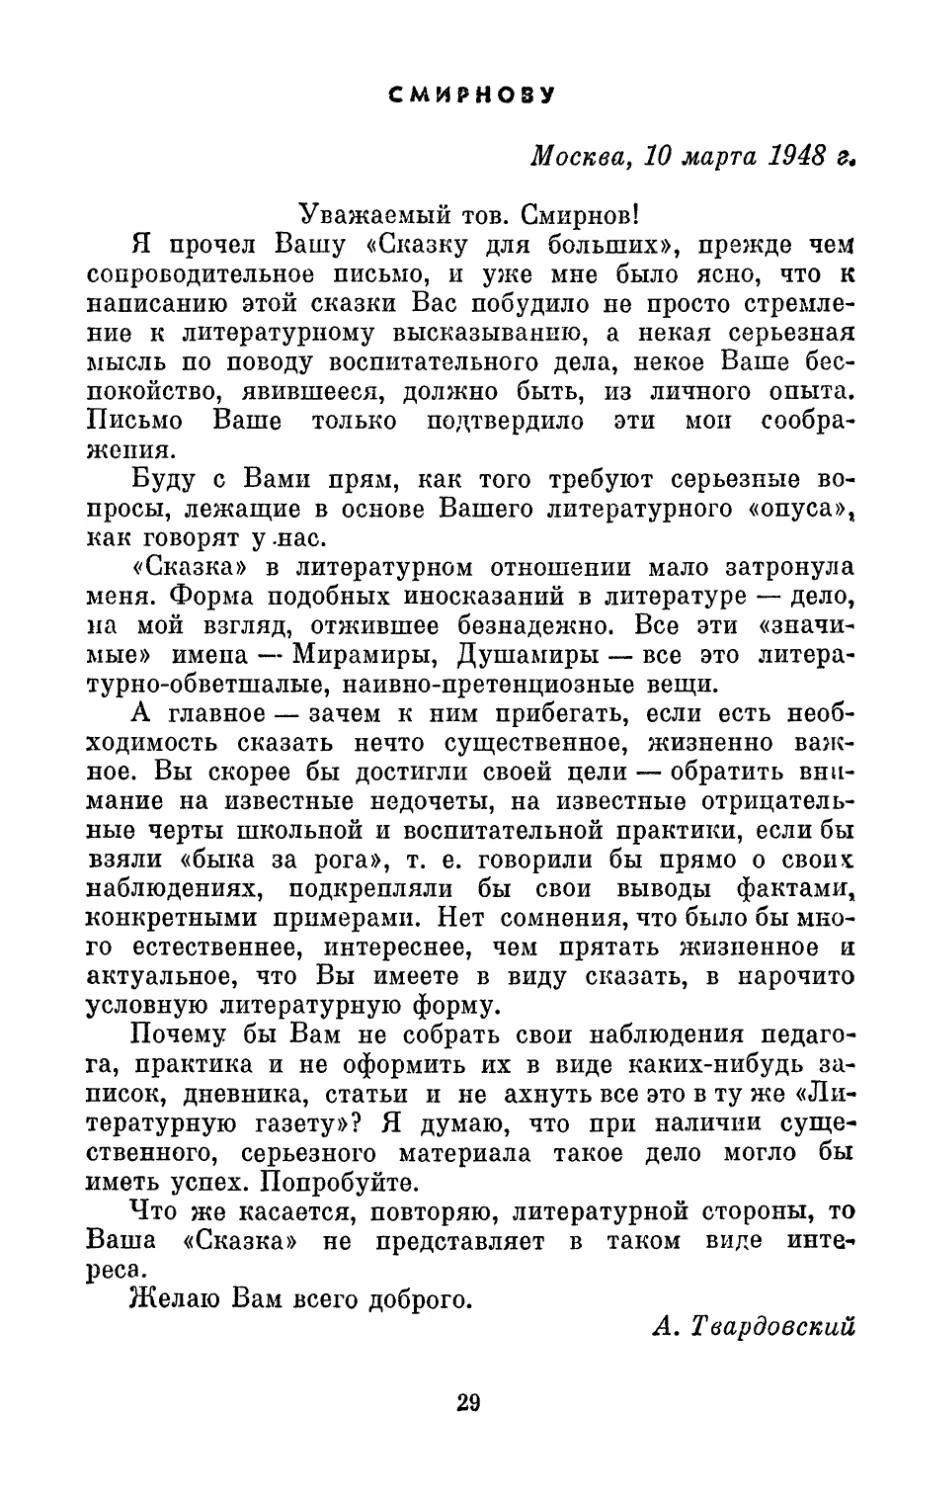 Смирнову, 10 марта 1948 г.